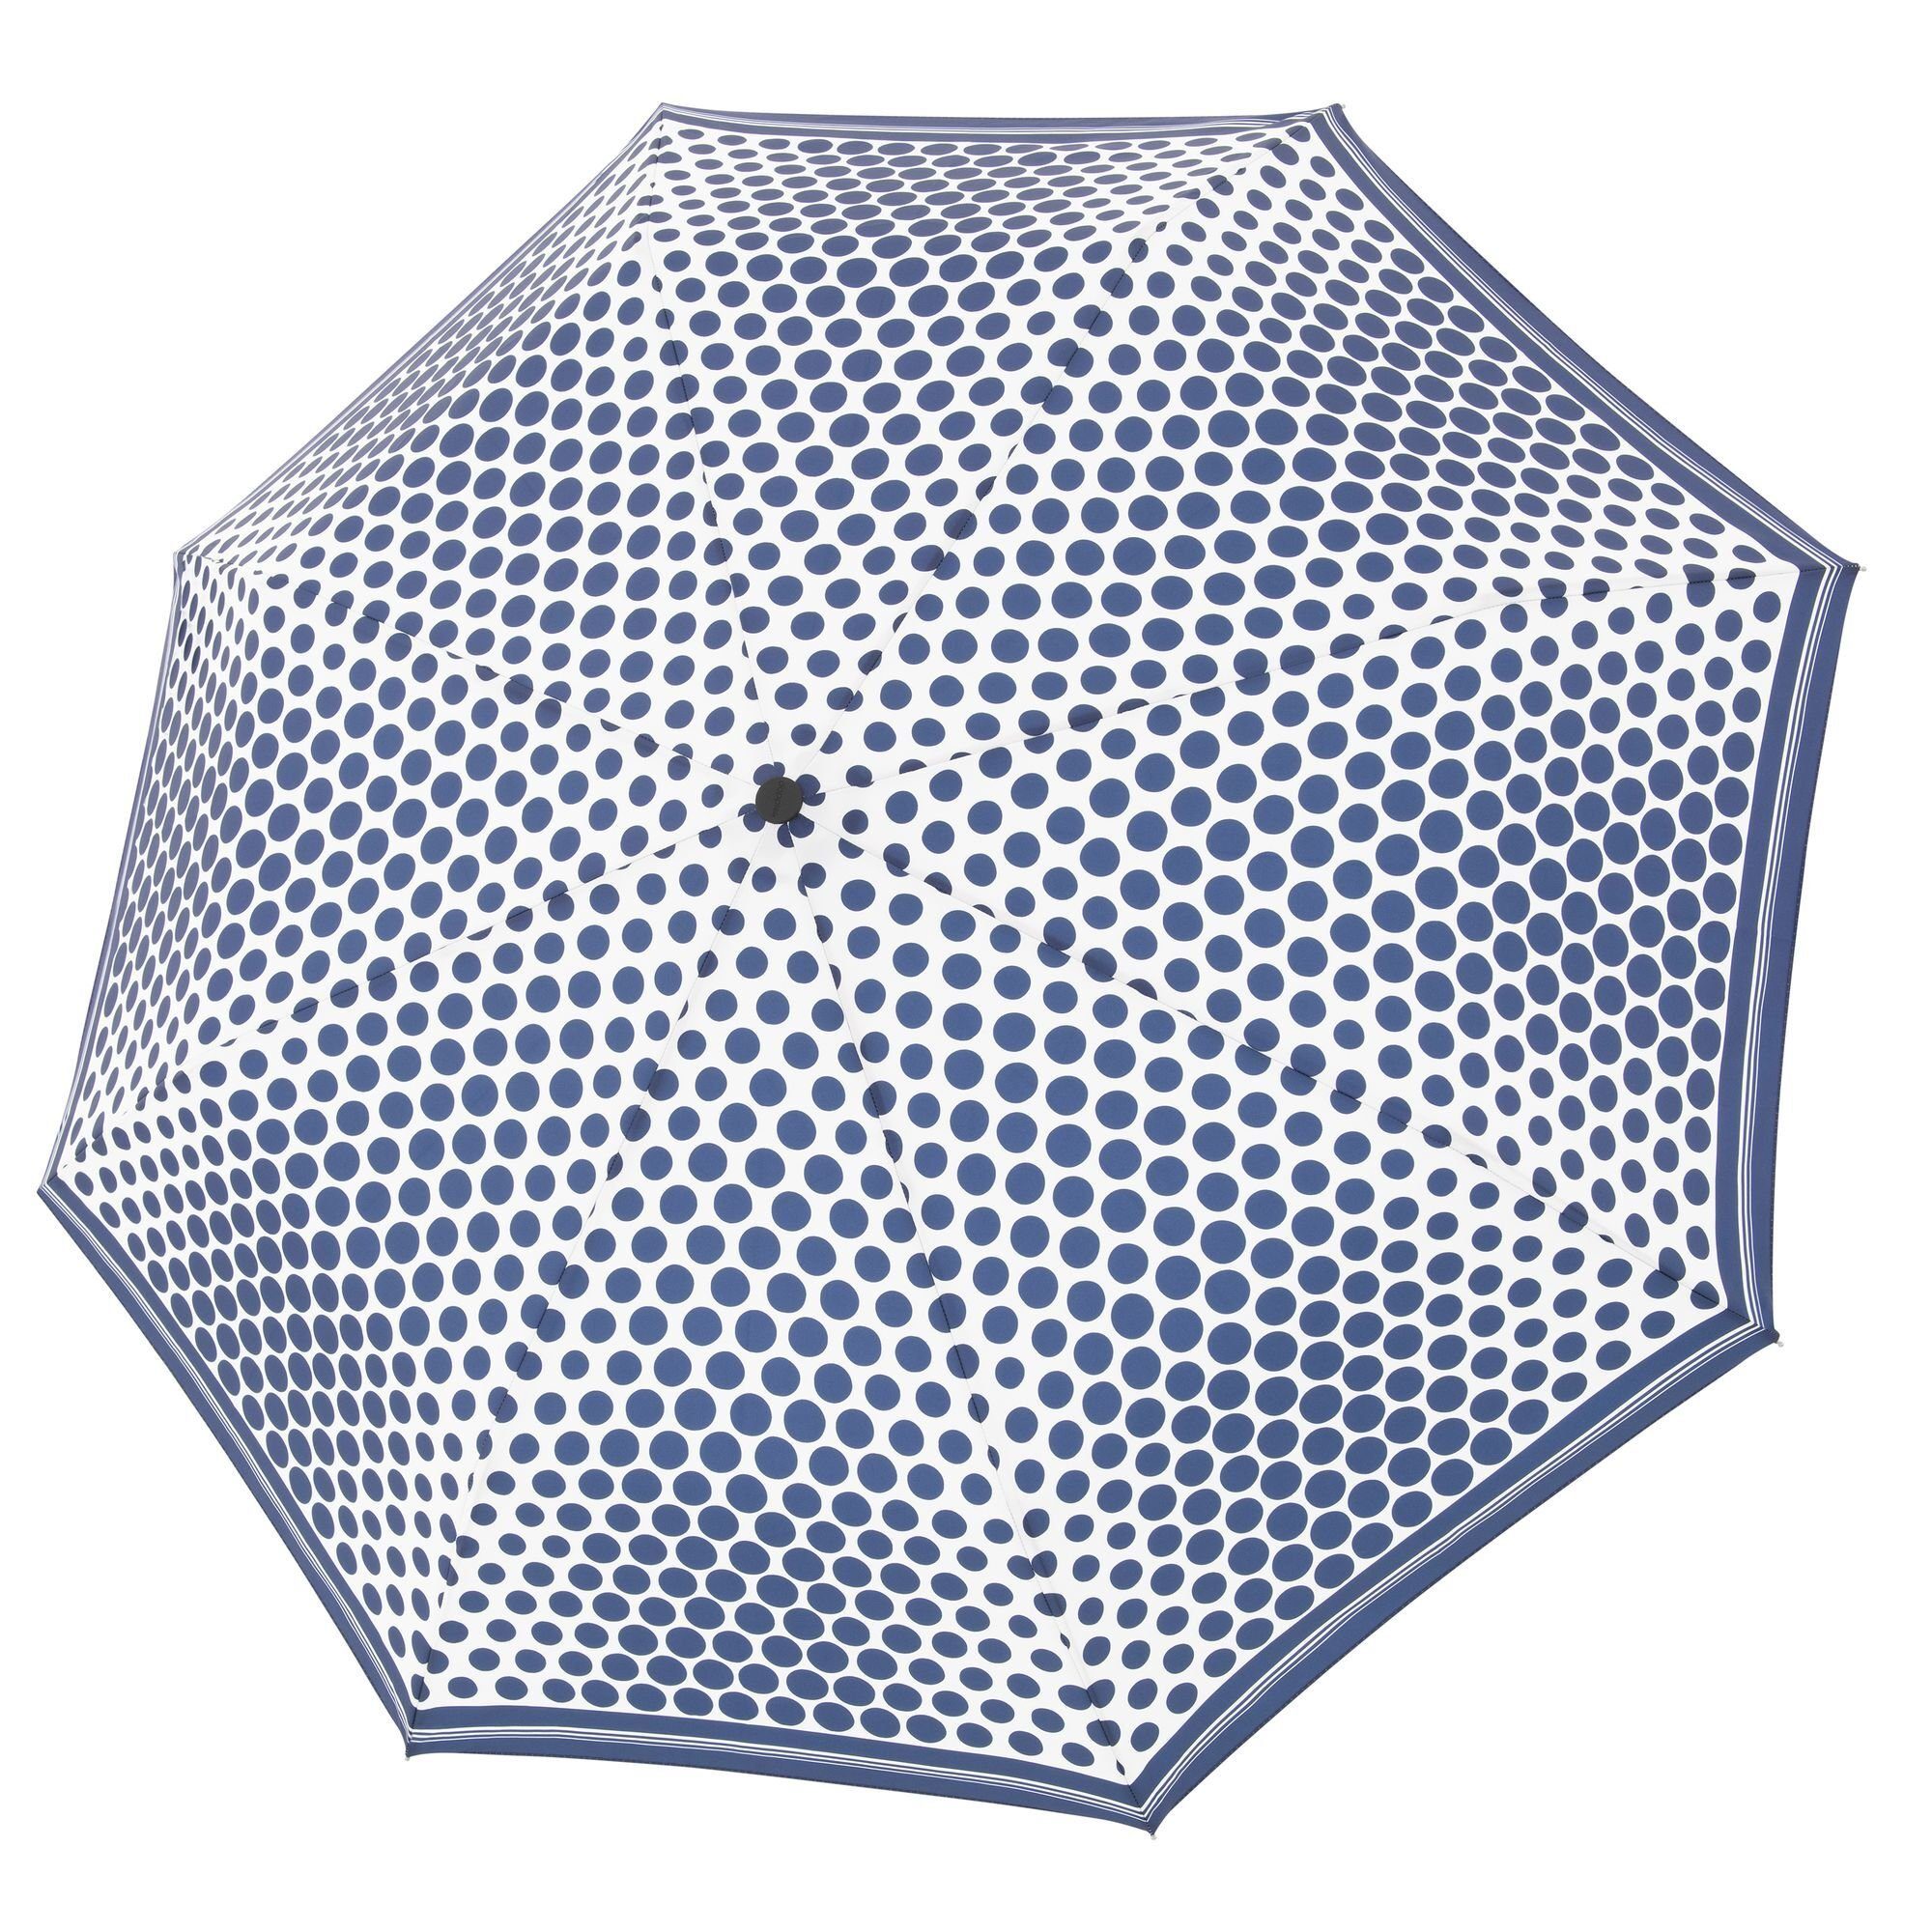 MANUFAKTUR Classic Taschenregenschirm doppler